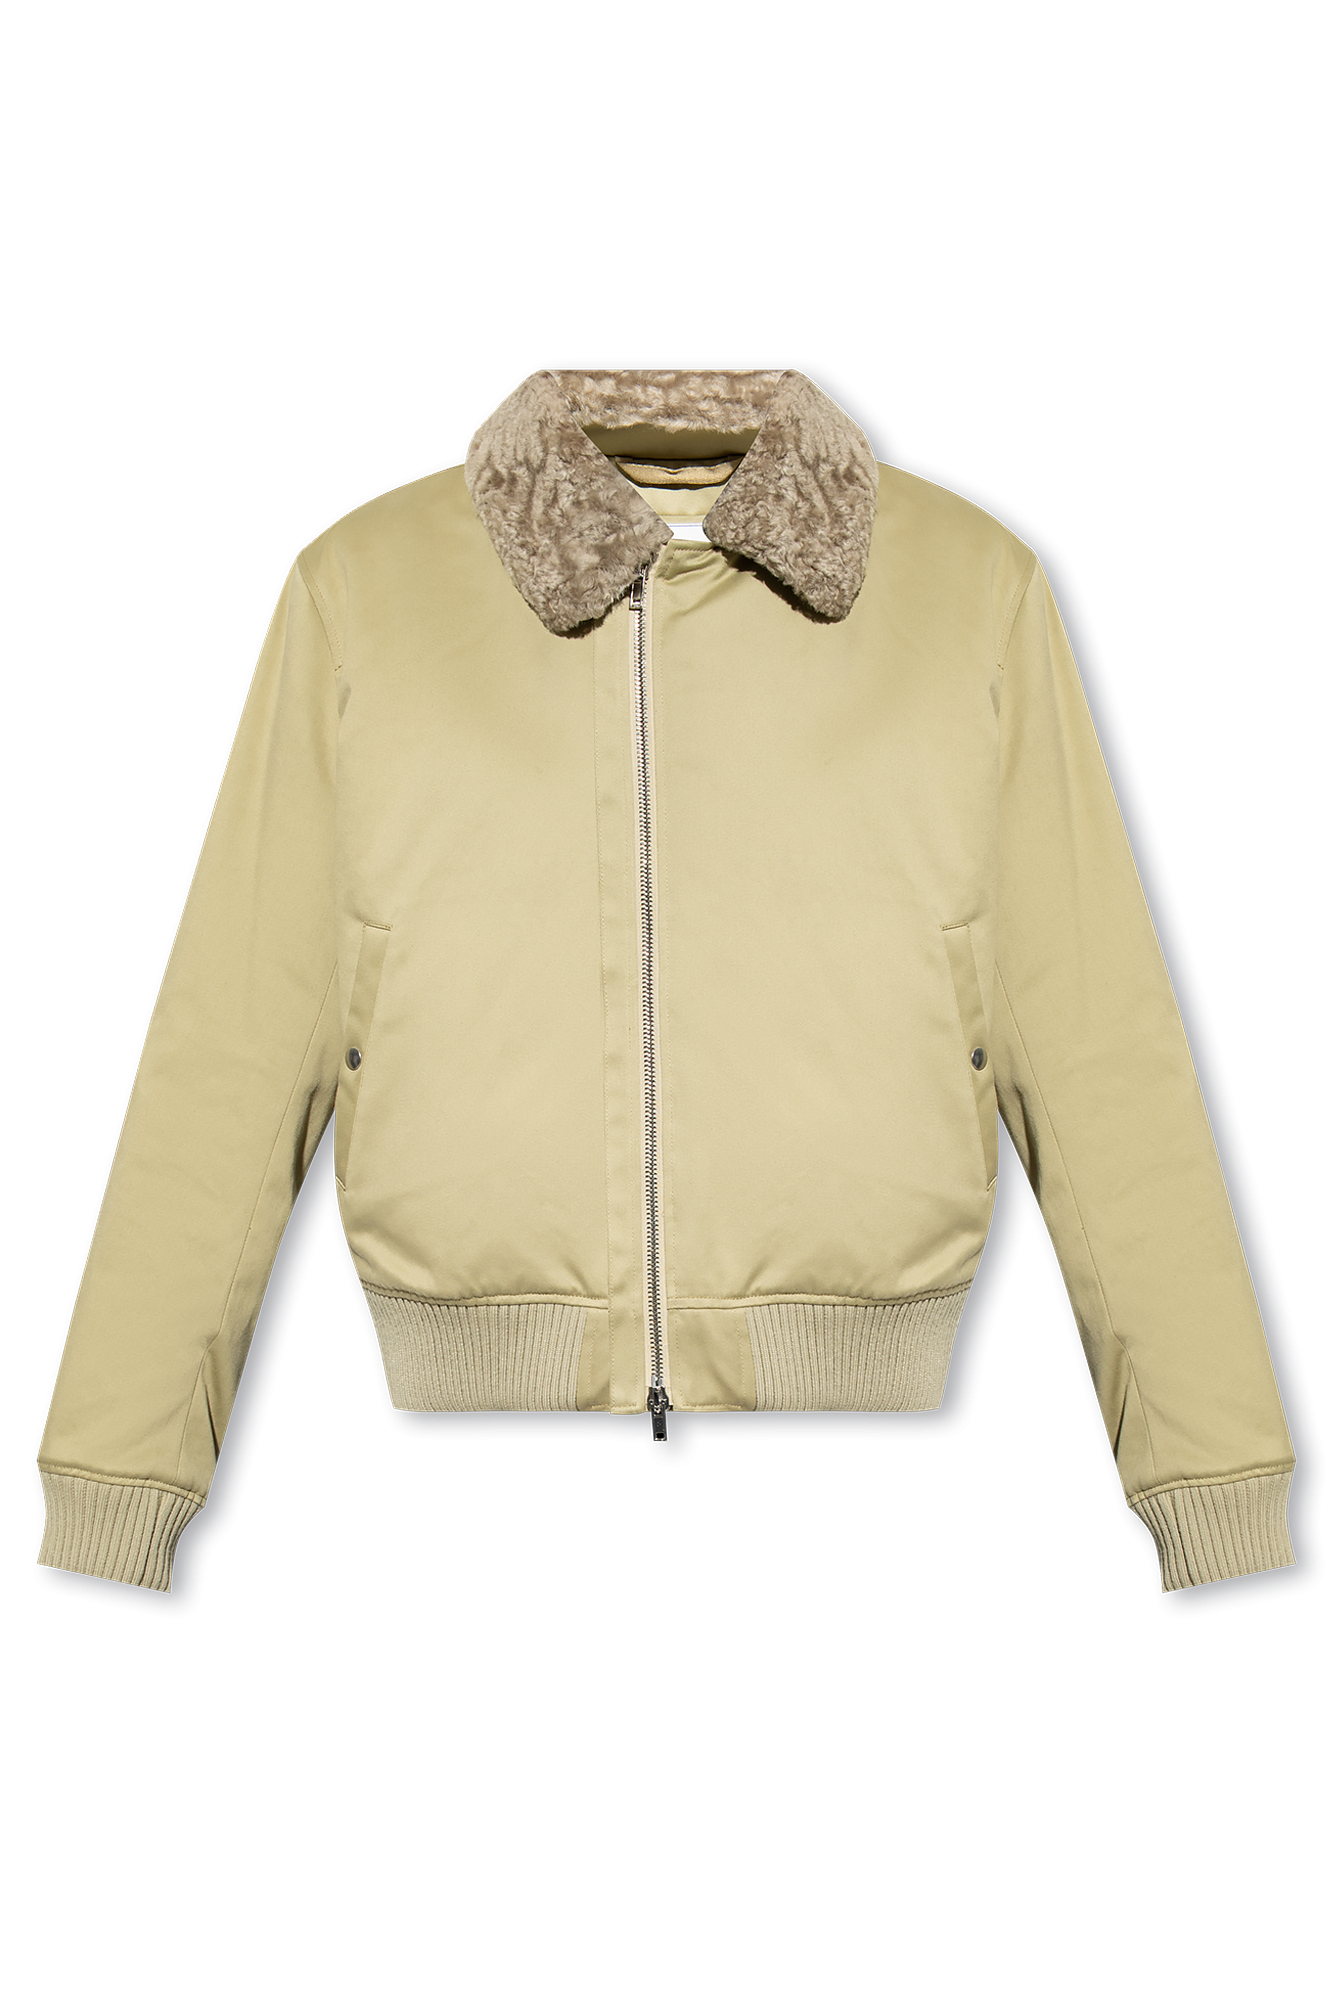 Burberry Aviator jacket